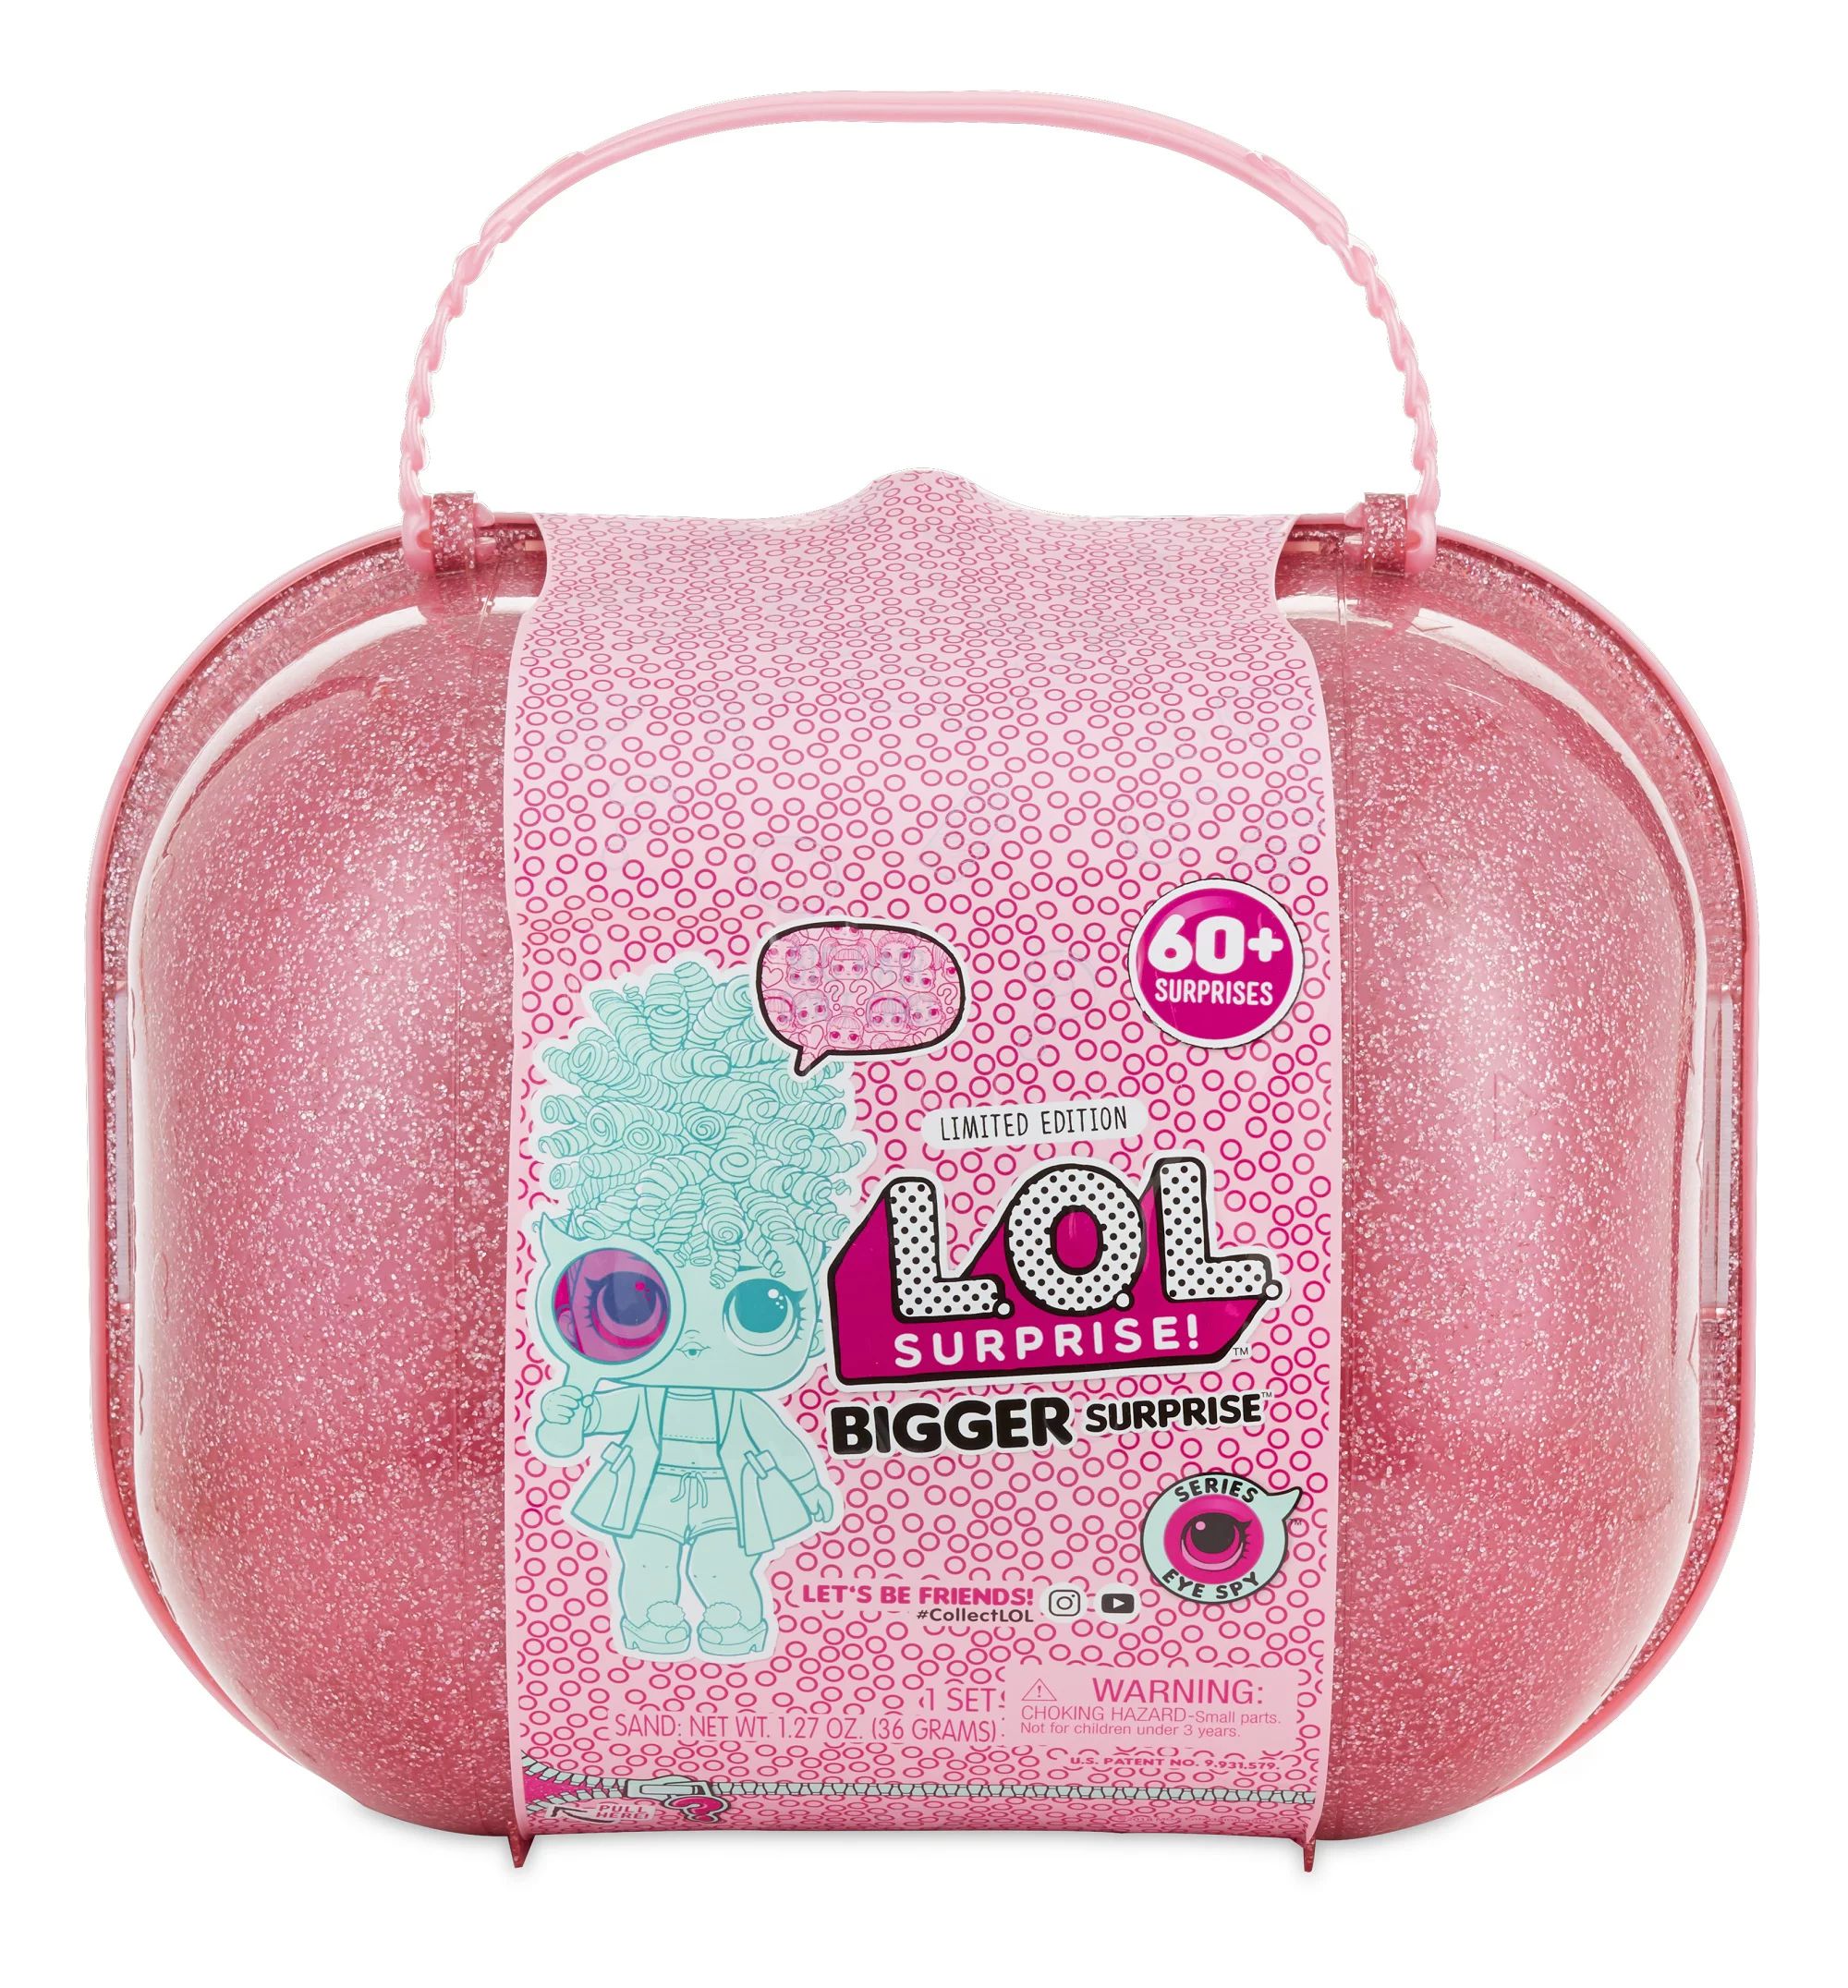 LOL Surprise Bigger Surprise Limited Edition 2 Dolls, 1 Pet, 1 Lil Sis With 60 Surprises - Toys f... | Walmart (US)